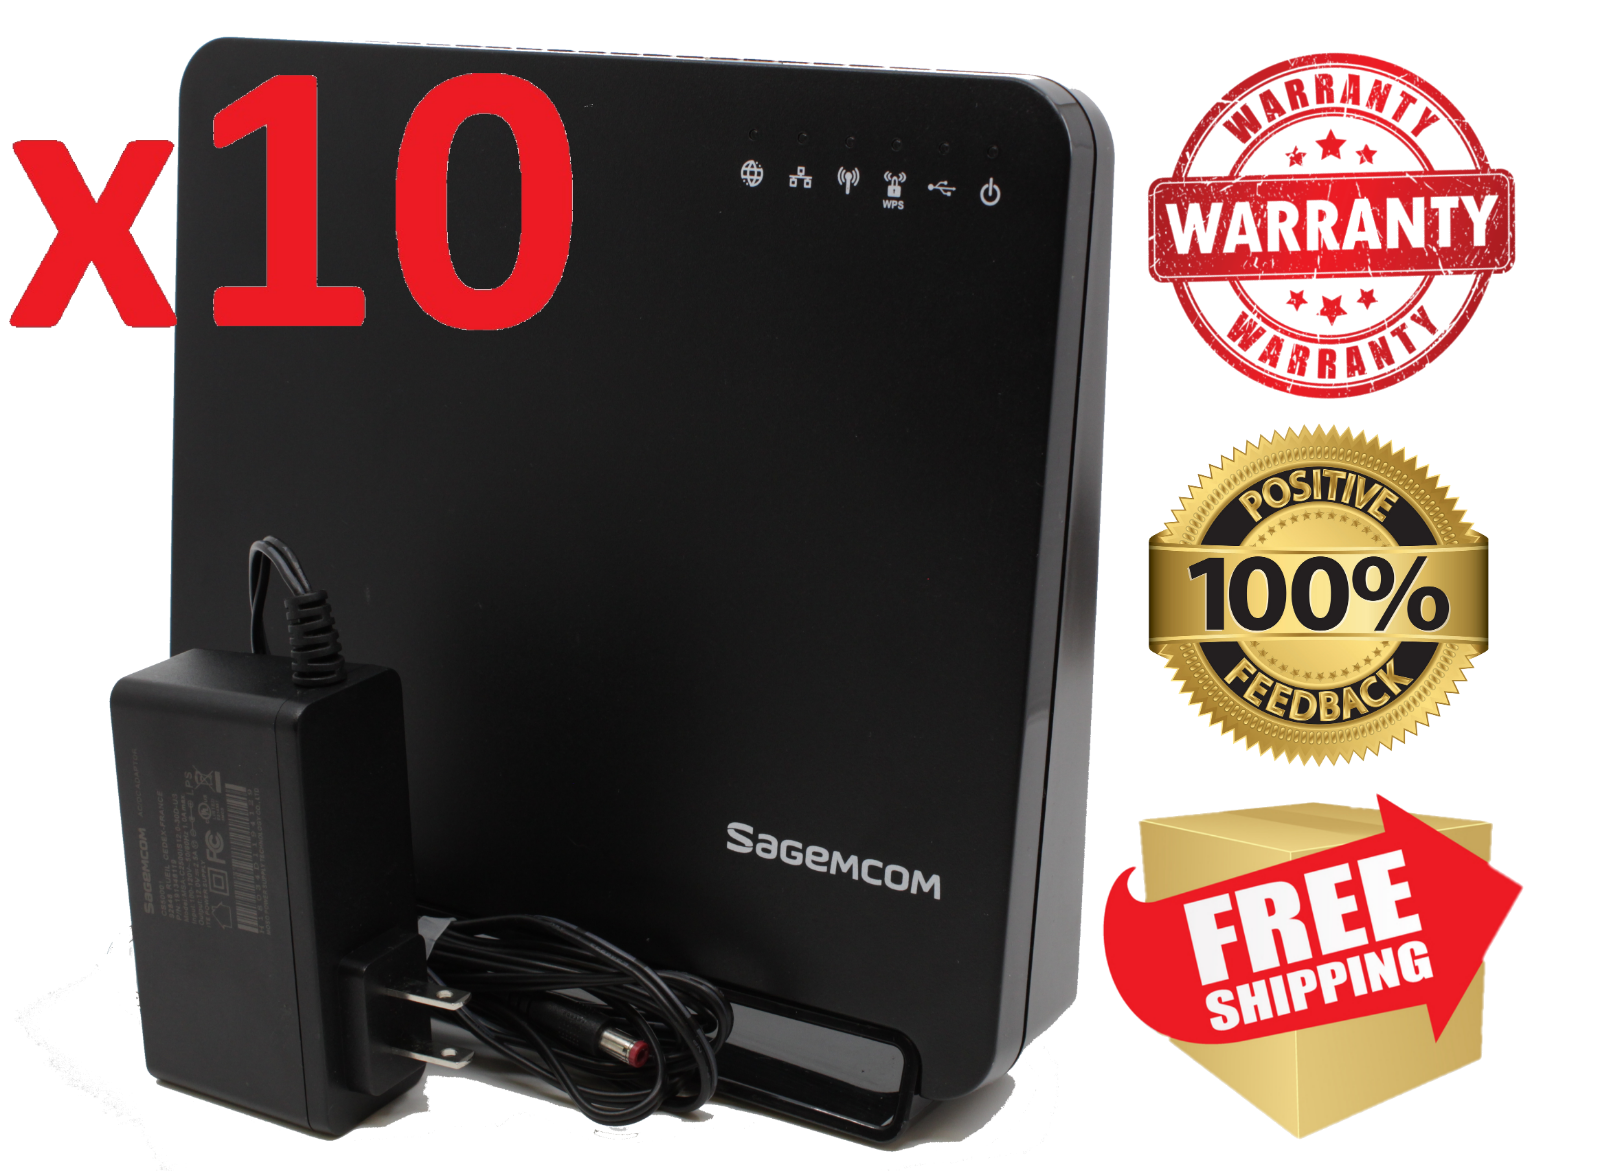 Lot x10 Sagemcom Fast5260 Gigabit Wireless AC Router * WARRANTY * FREE SHIPPING SAGEMCOM 5260